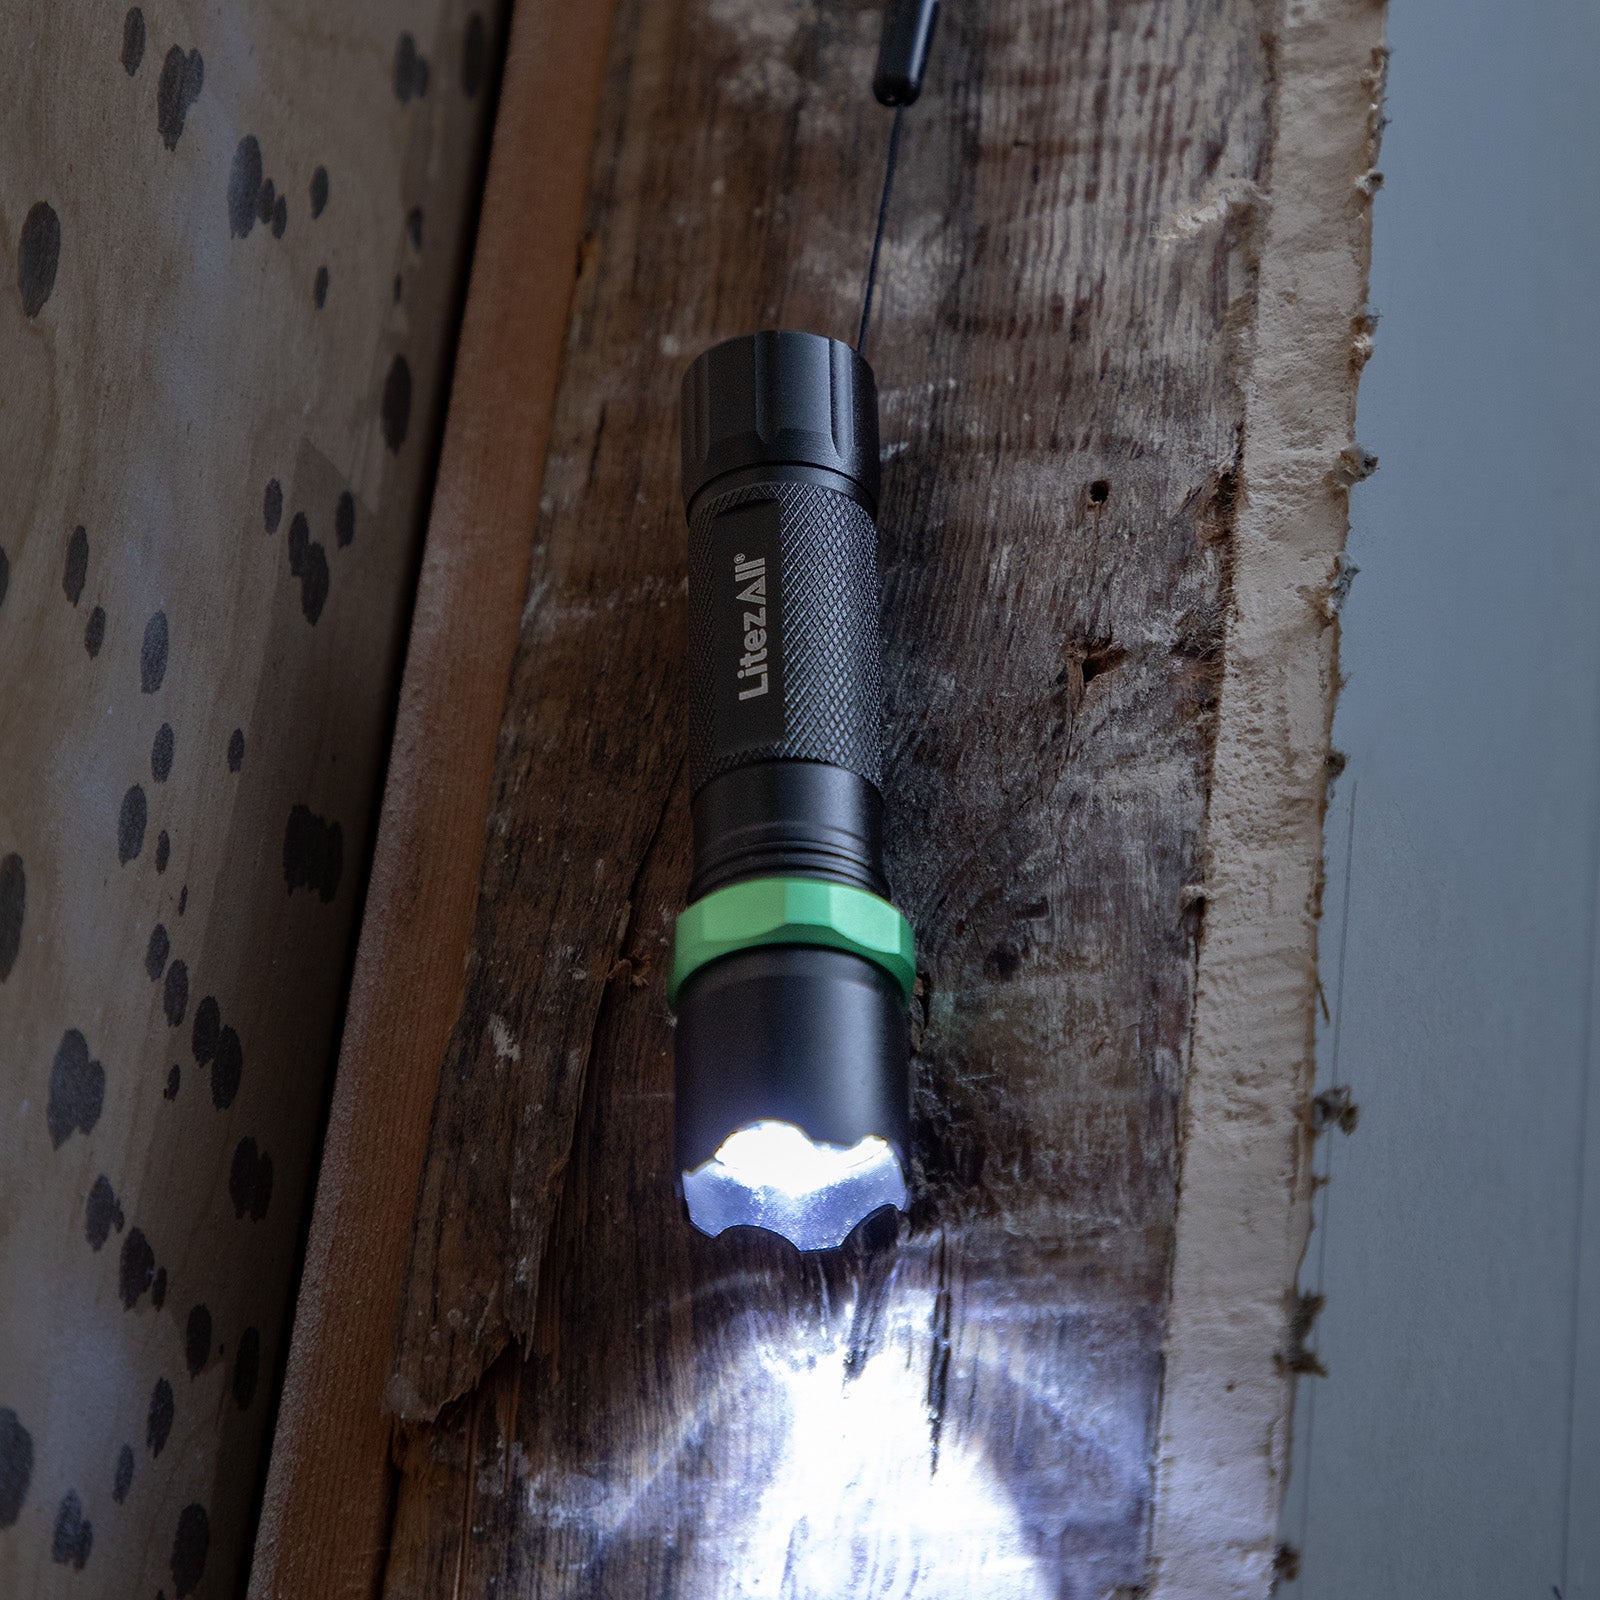 LitezAll Rechargeable Mini Tactical Flashlight